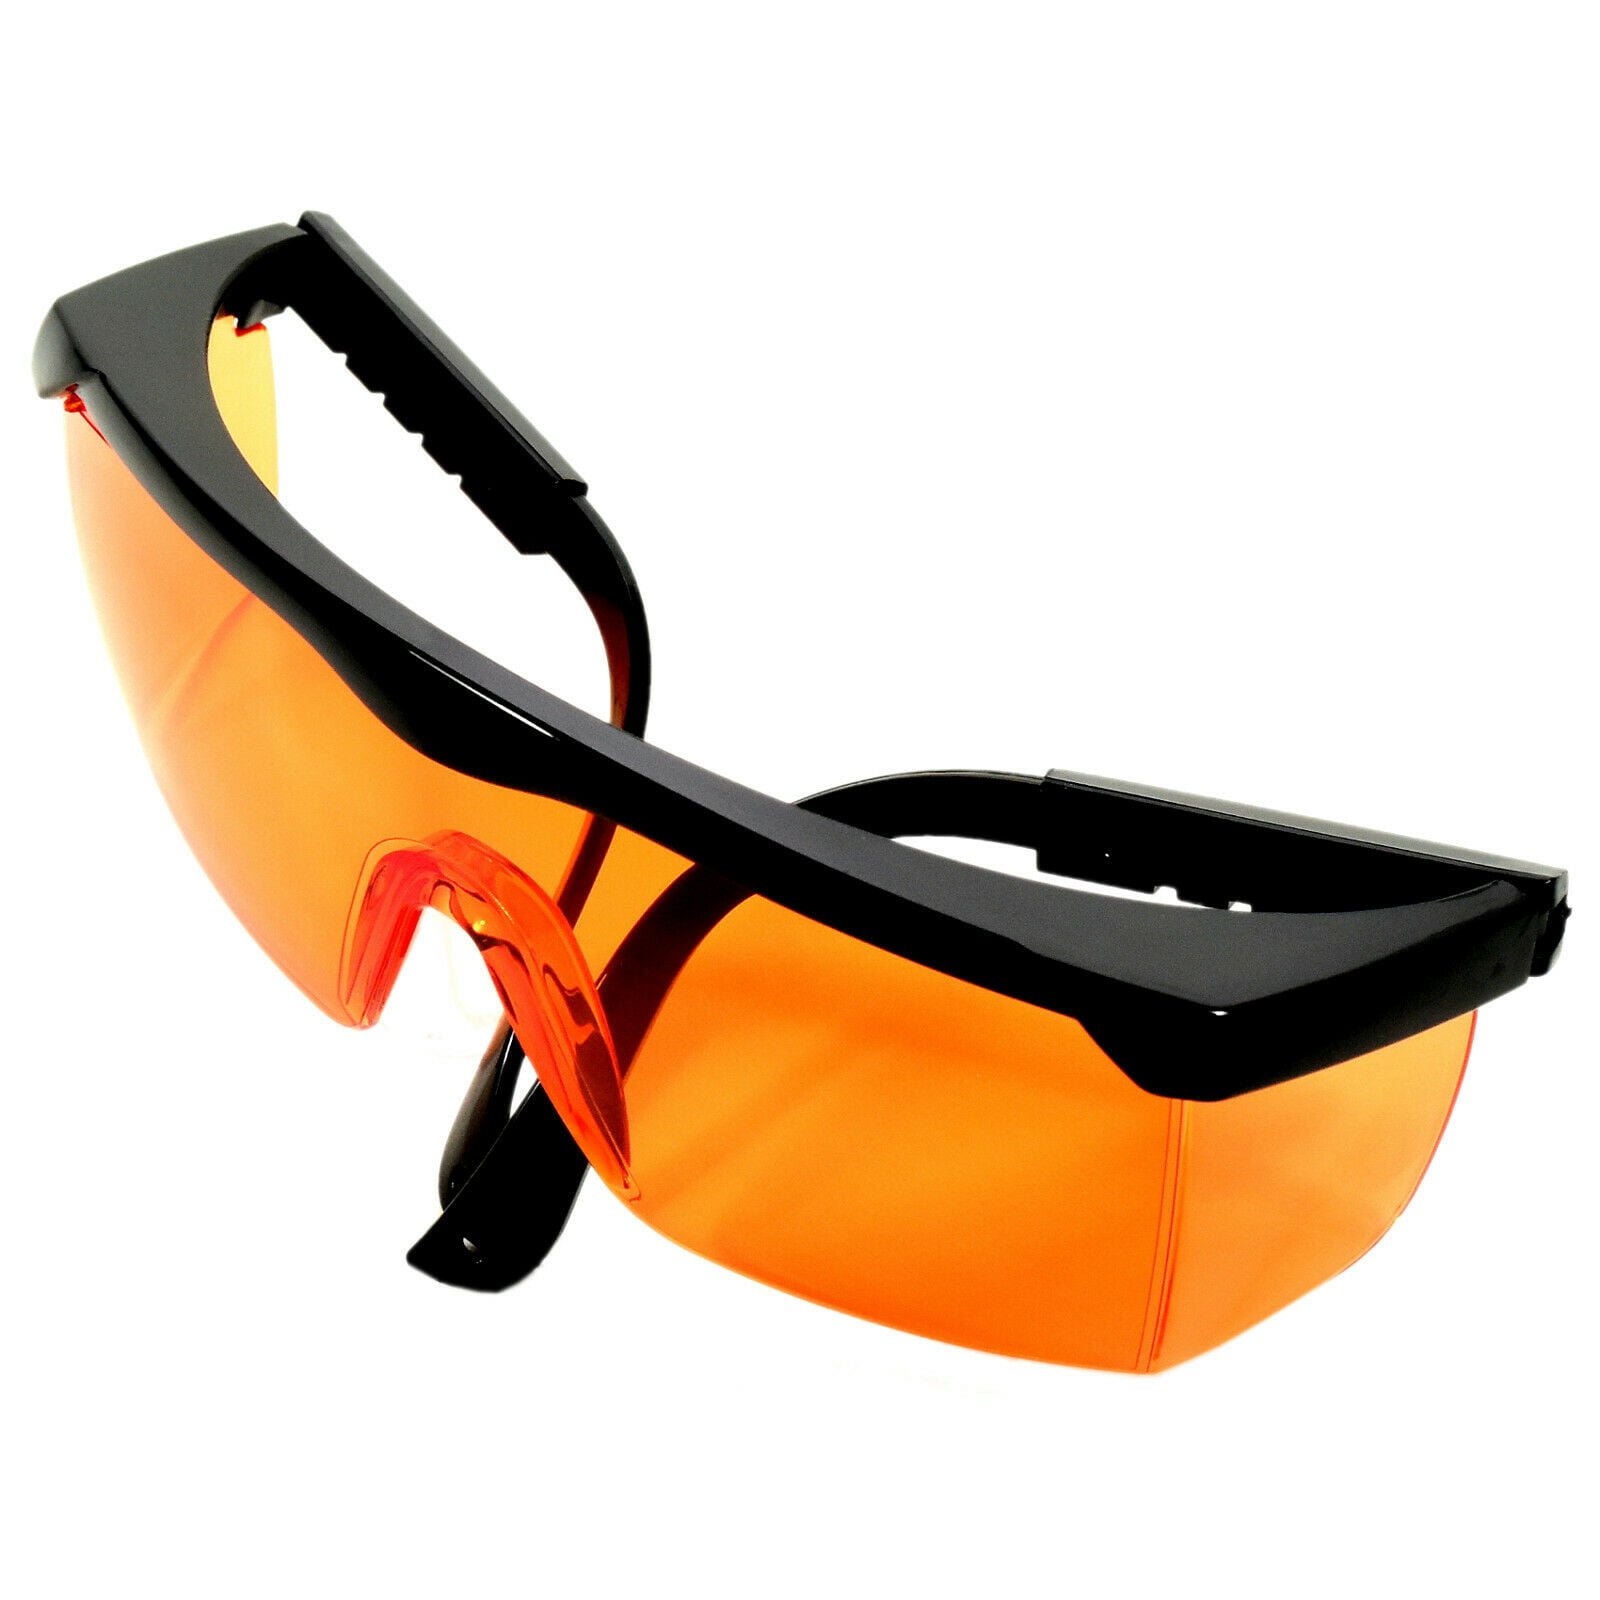 Details about   Blue-violet Laser Goggles Safety Glasses Protective Eyewear 